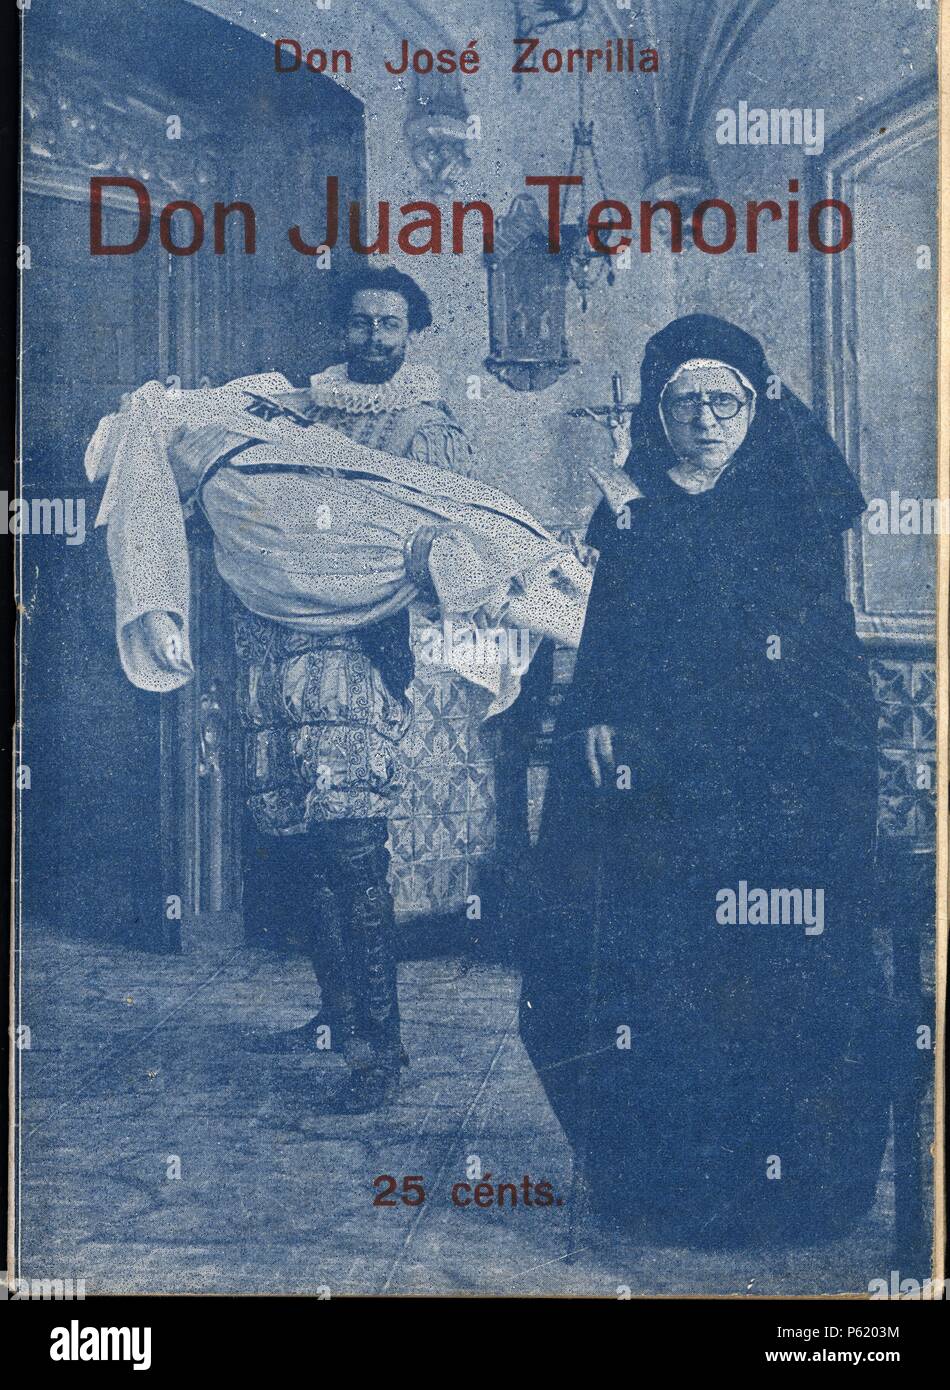 Don Juan Tenorio, drama de José Zorrilla. Argumento publicado en Barcelona, 1915. Stock Photo